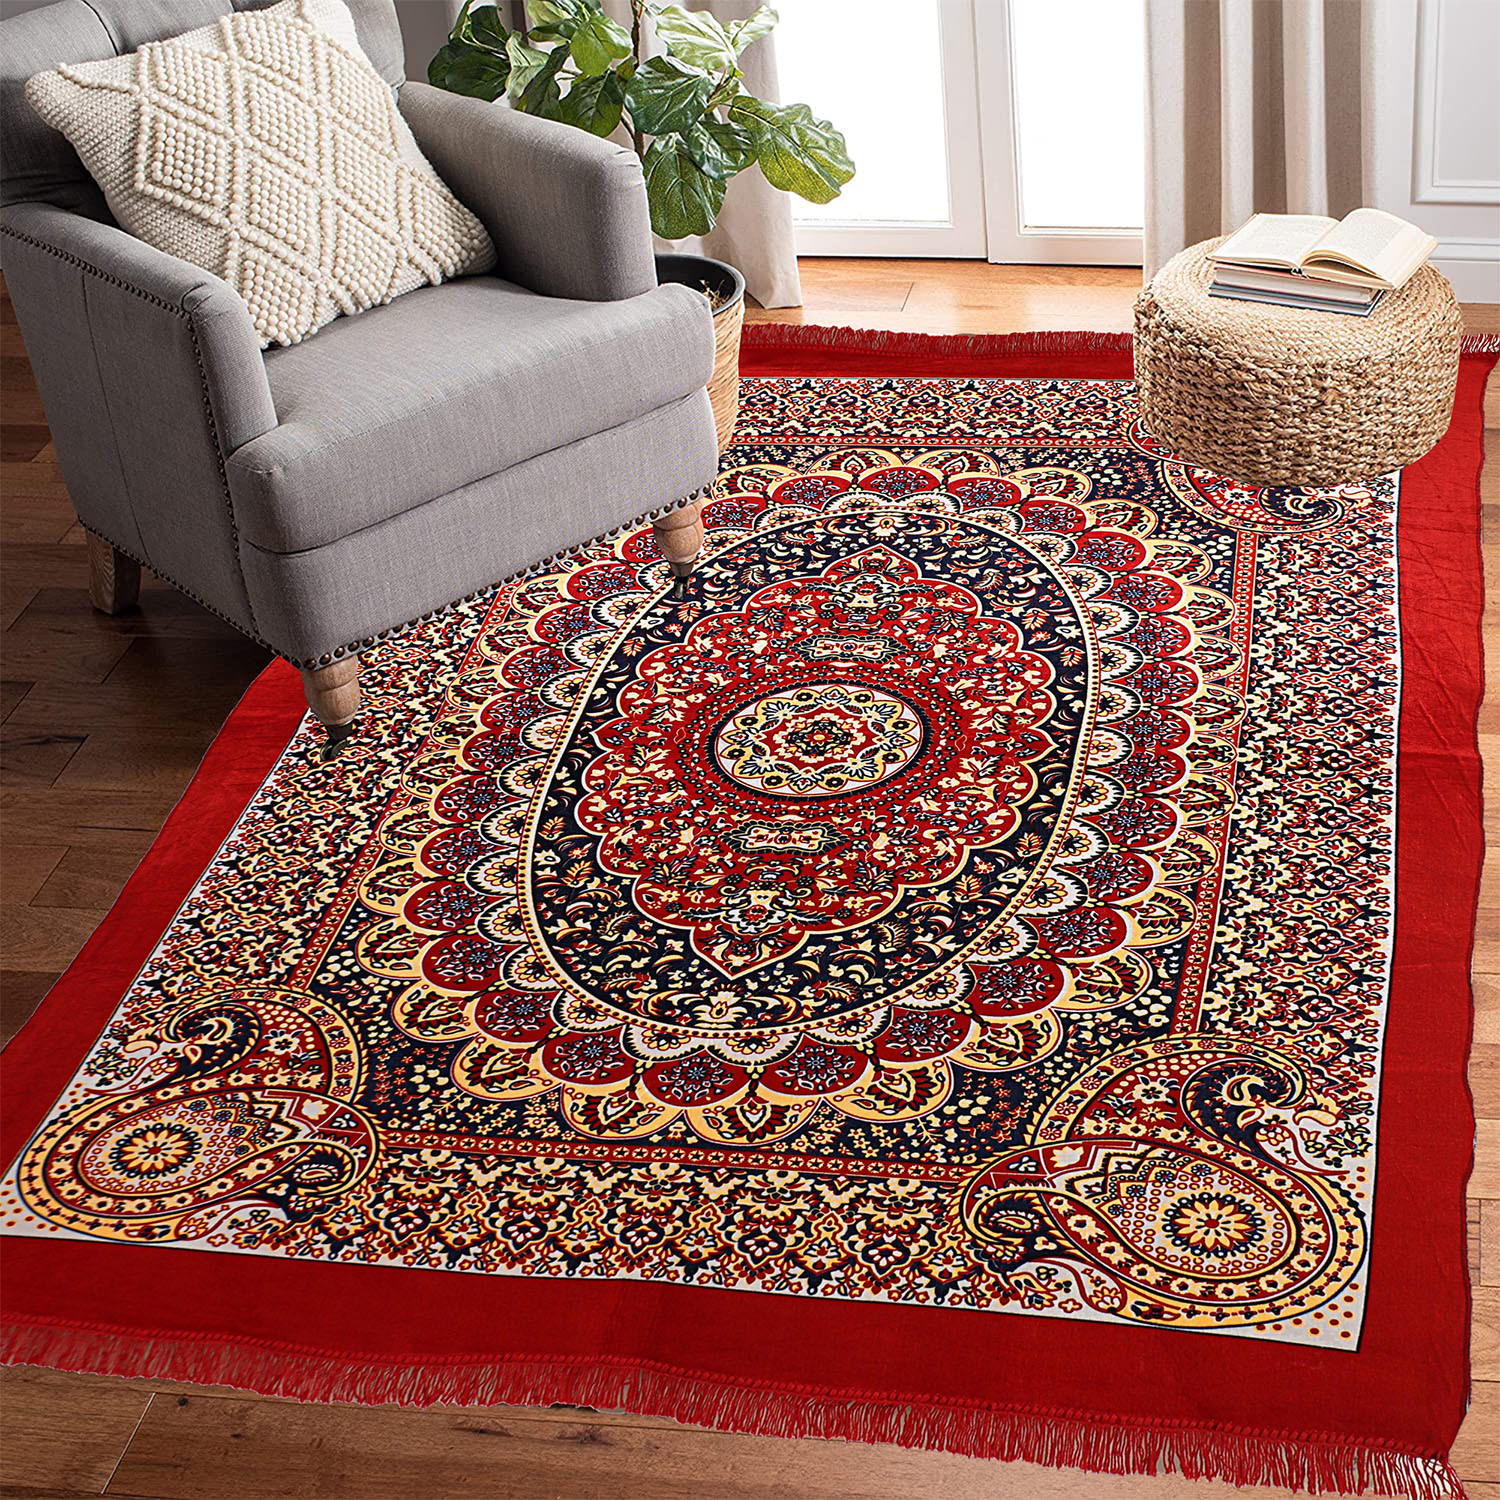 Kuber Industries Carpet|Water Absorption Kalamkari Paisley Pattern Floor Mat|Velvet Sitting Carpet for Hall, Living Room, 5x7 Feet (Red)